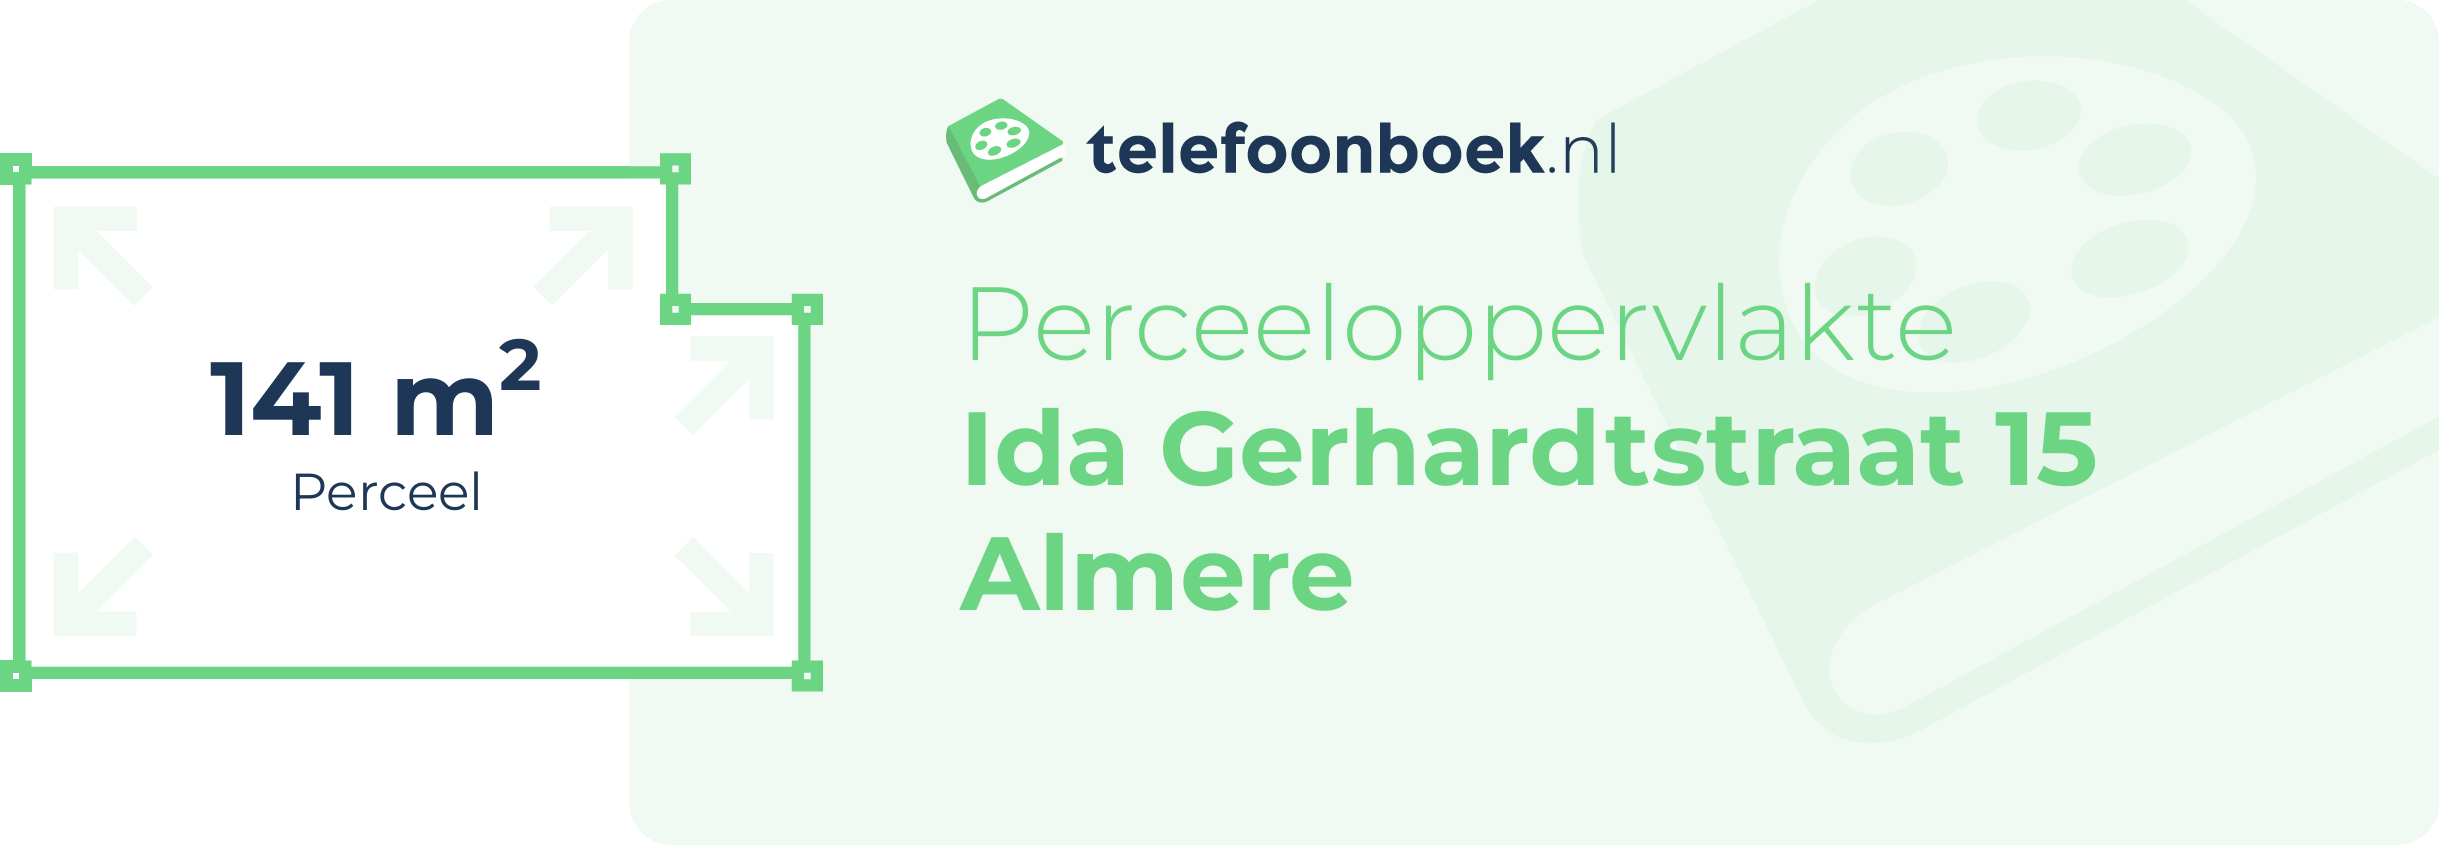 Perceeloppervlakte Ida Gerhardtstraat 15 Almere